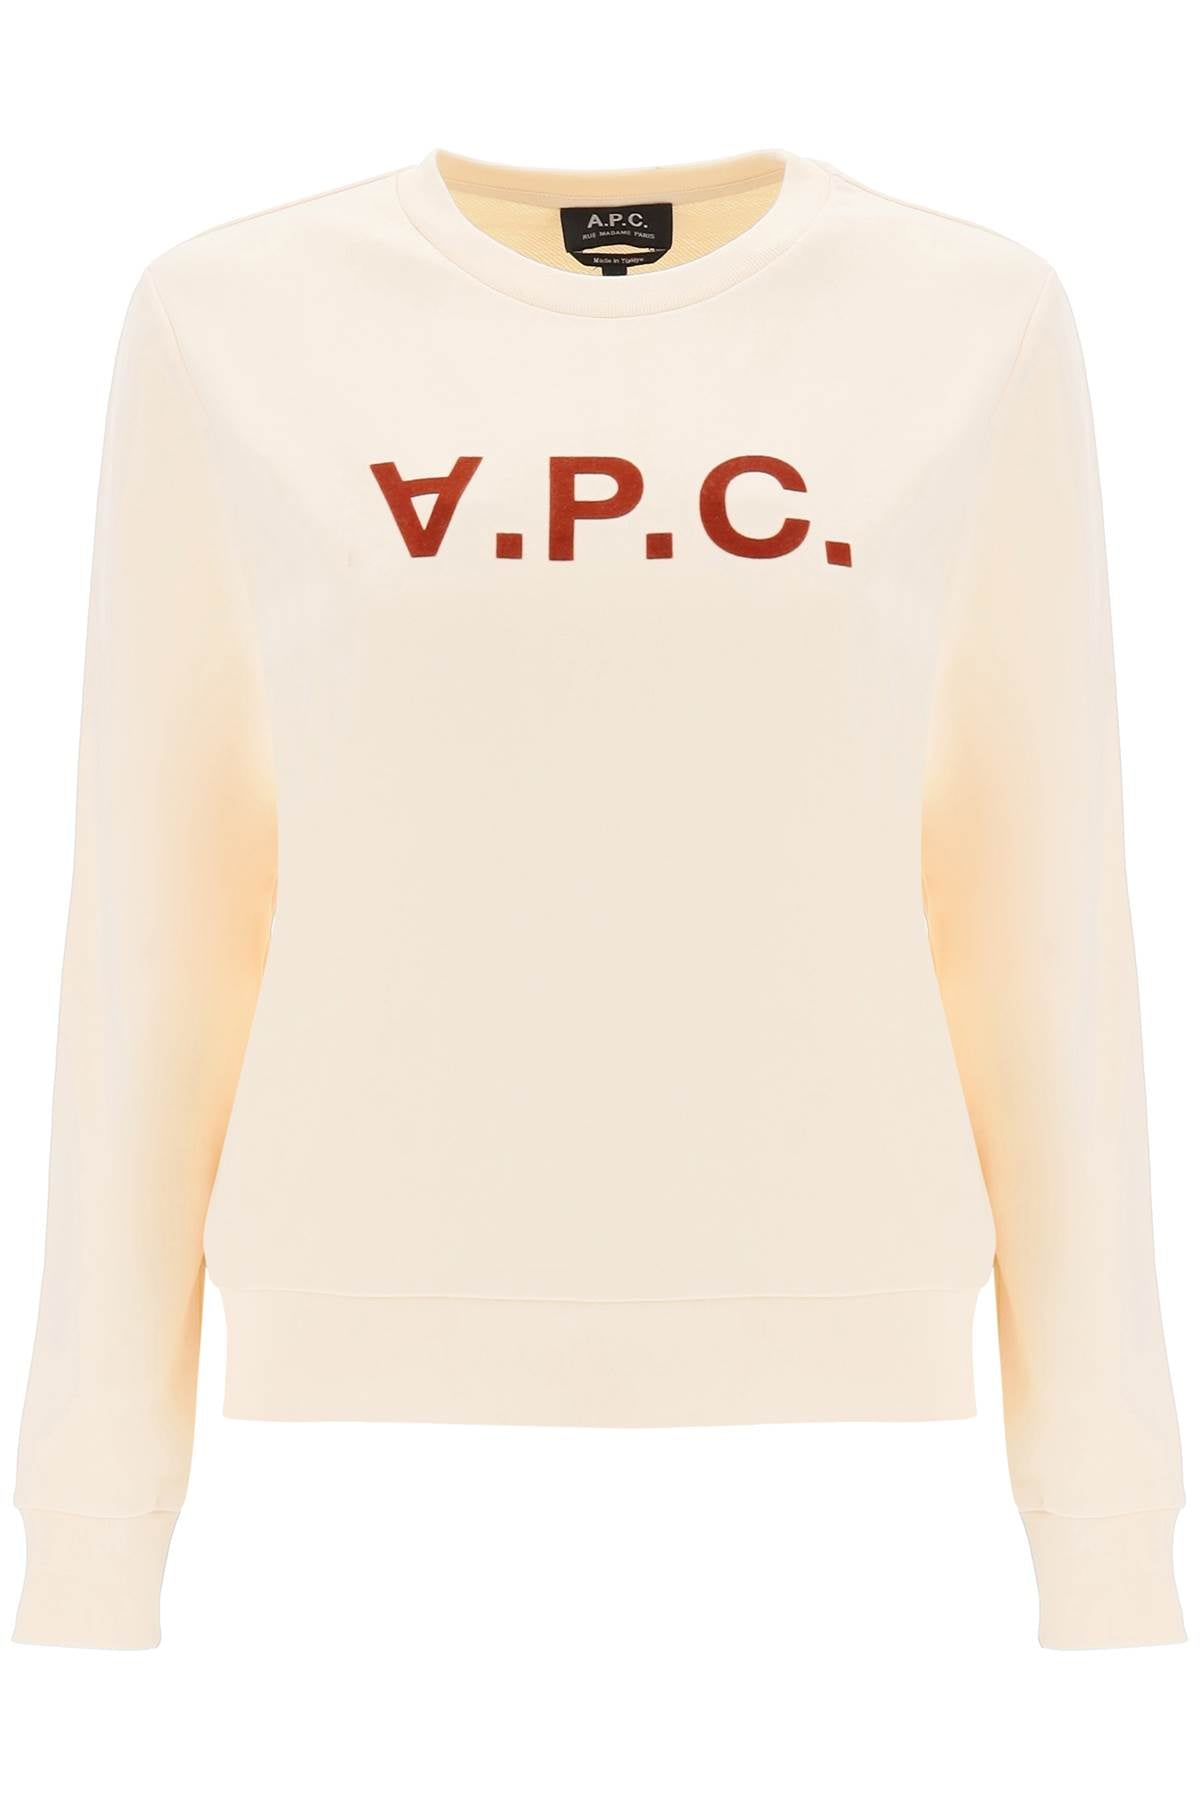 A.p.c. sweatshirt logo-0